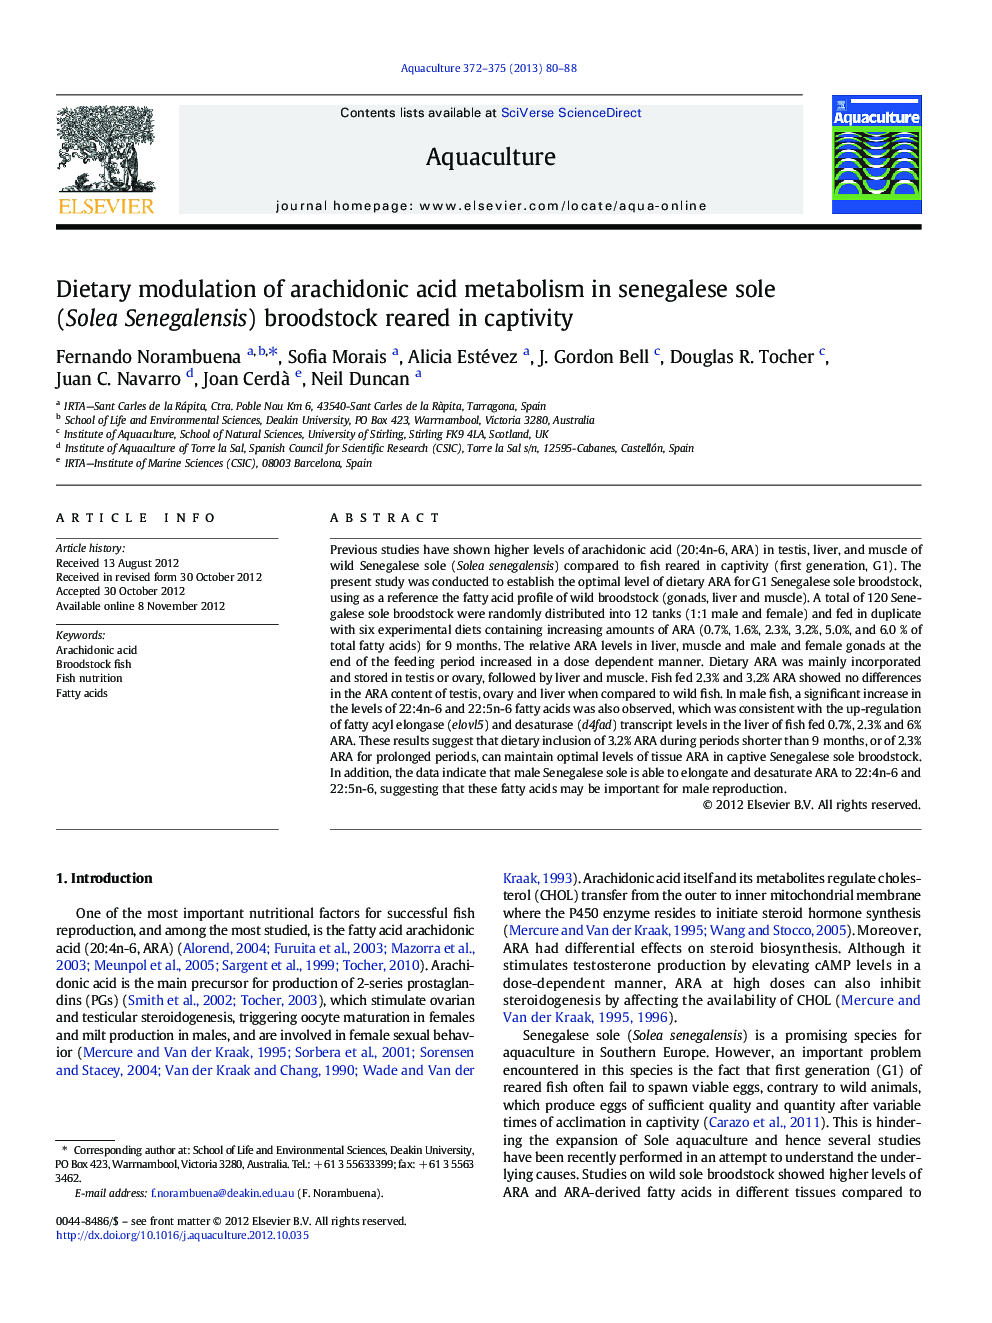 Dietary modulation of arachidonic acid metabolism in senegalese sole (Solea Senegalensis) broodstock reared in captivity